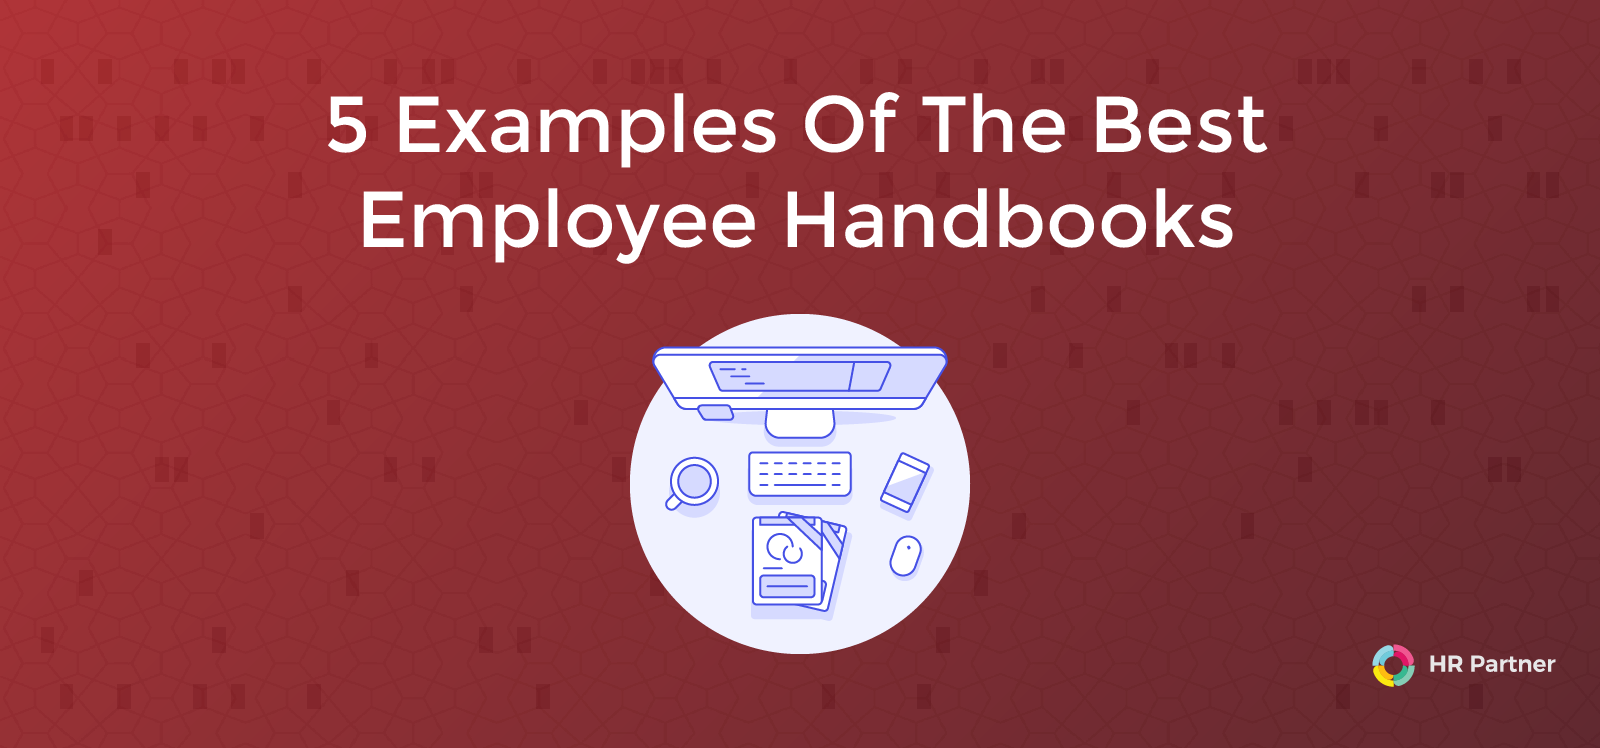 braums employee handbook